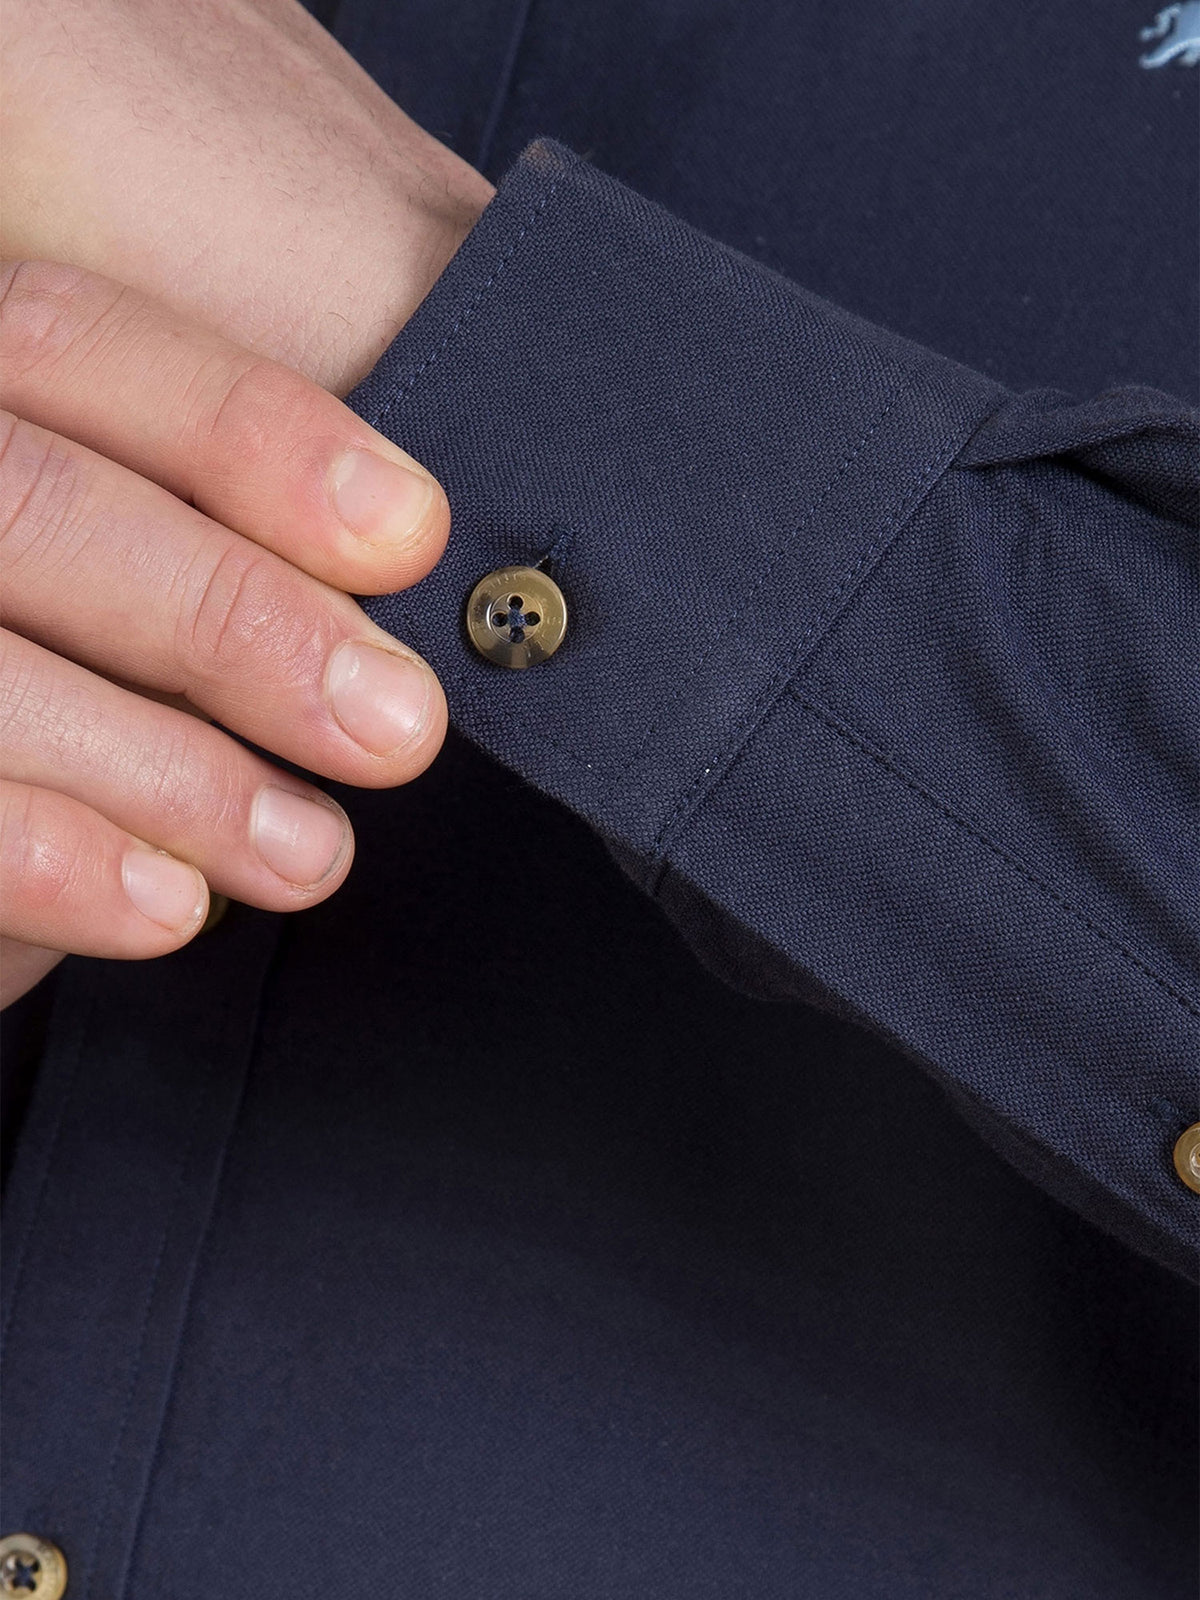 Classic Long Sleeve Oxford Shirt - Navy